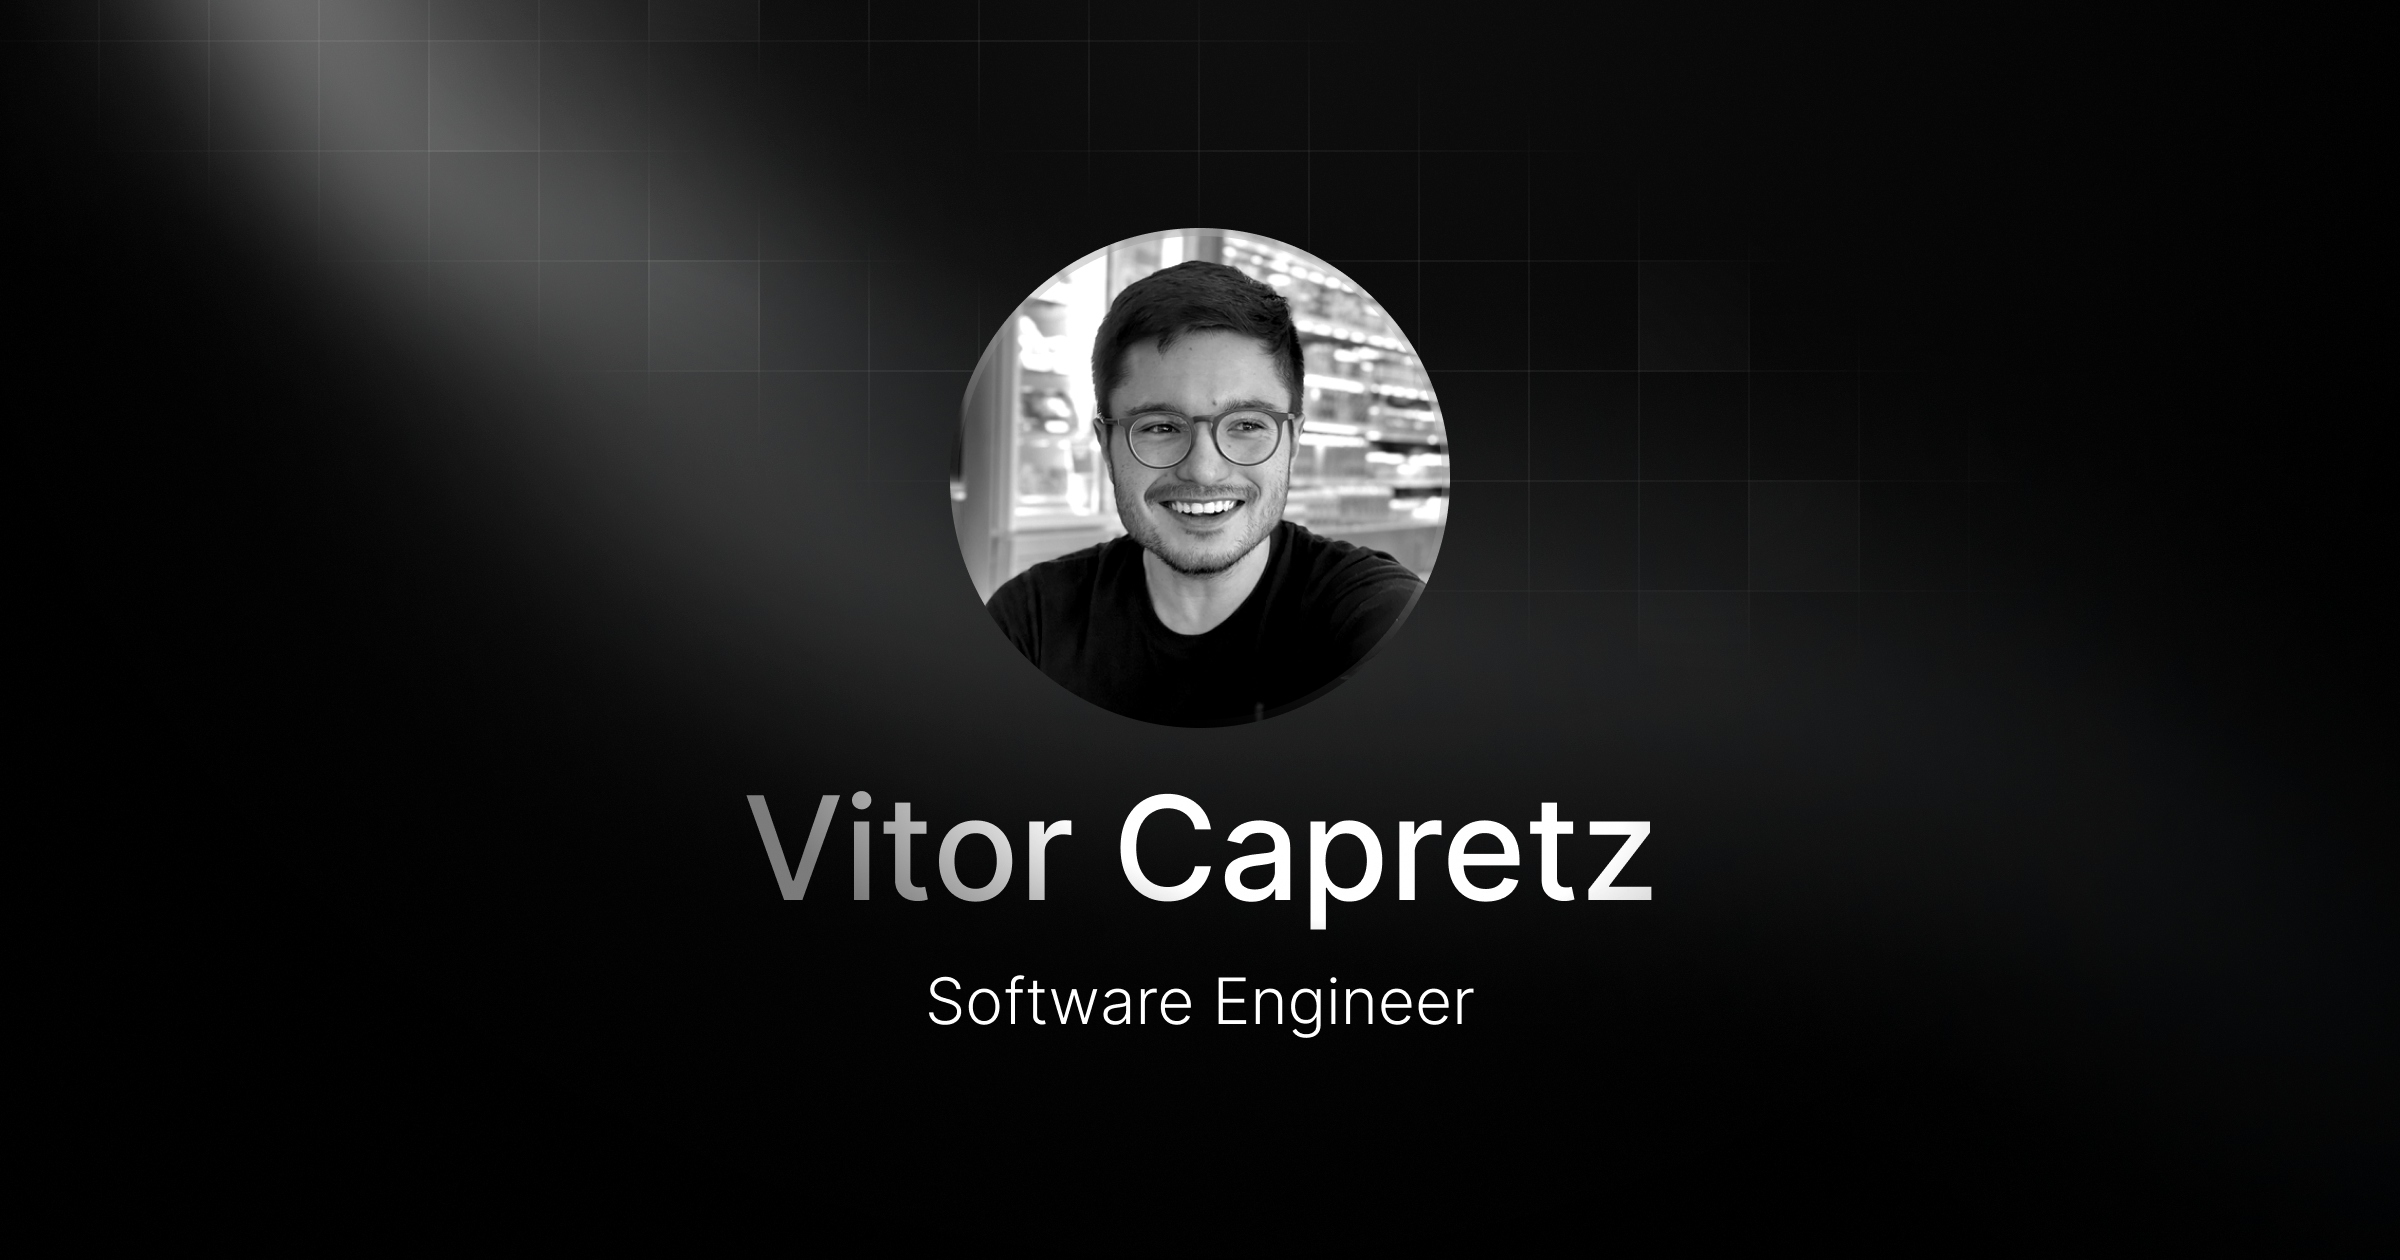 Welcoming Vitor Capretz, our new Software Engineer